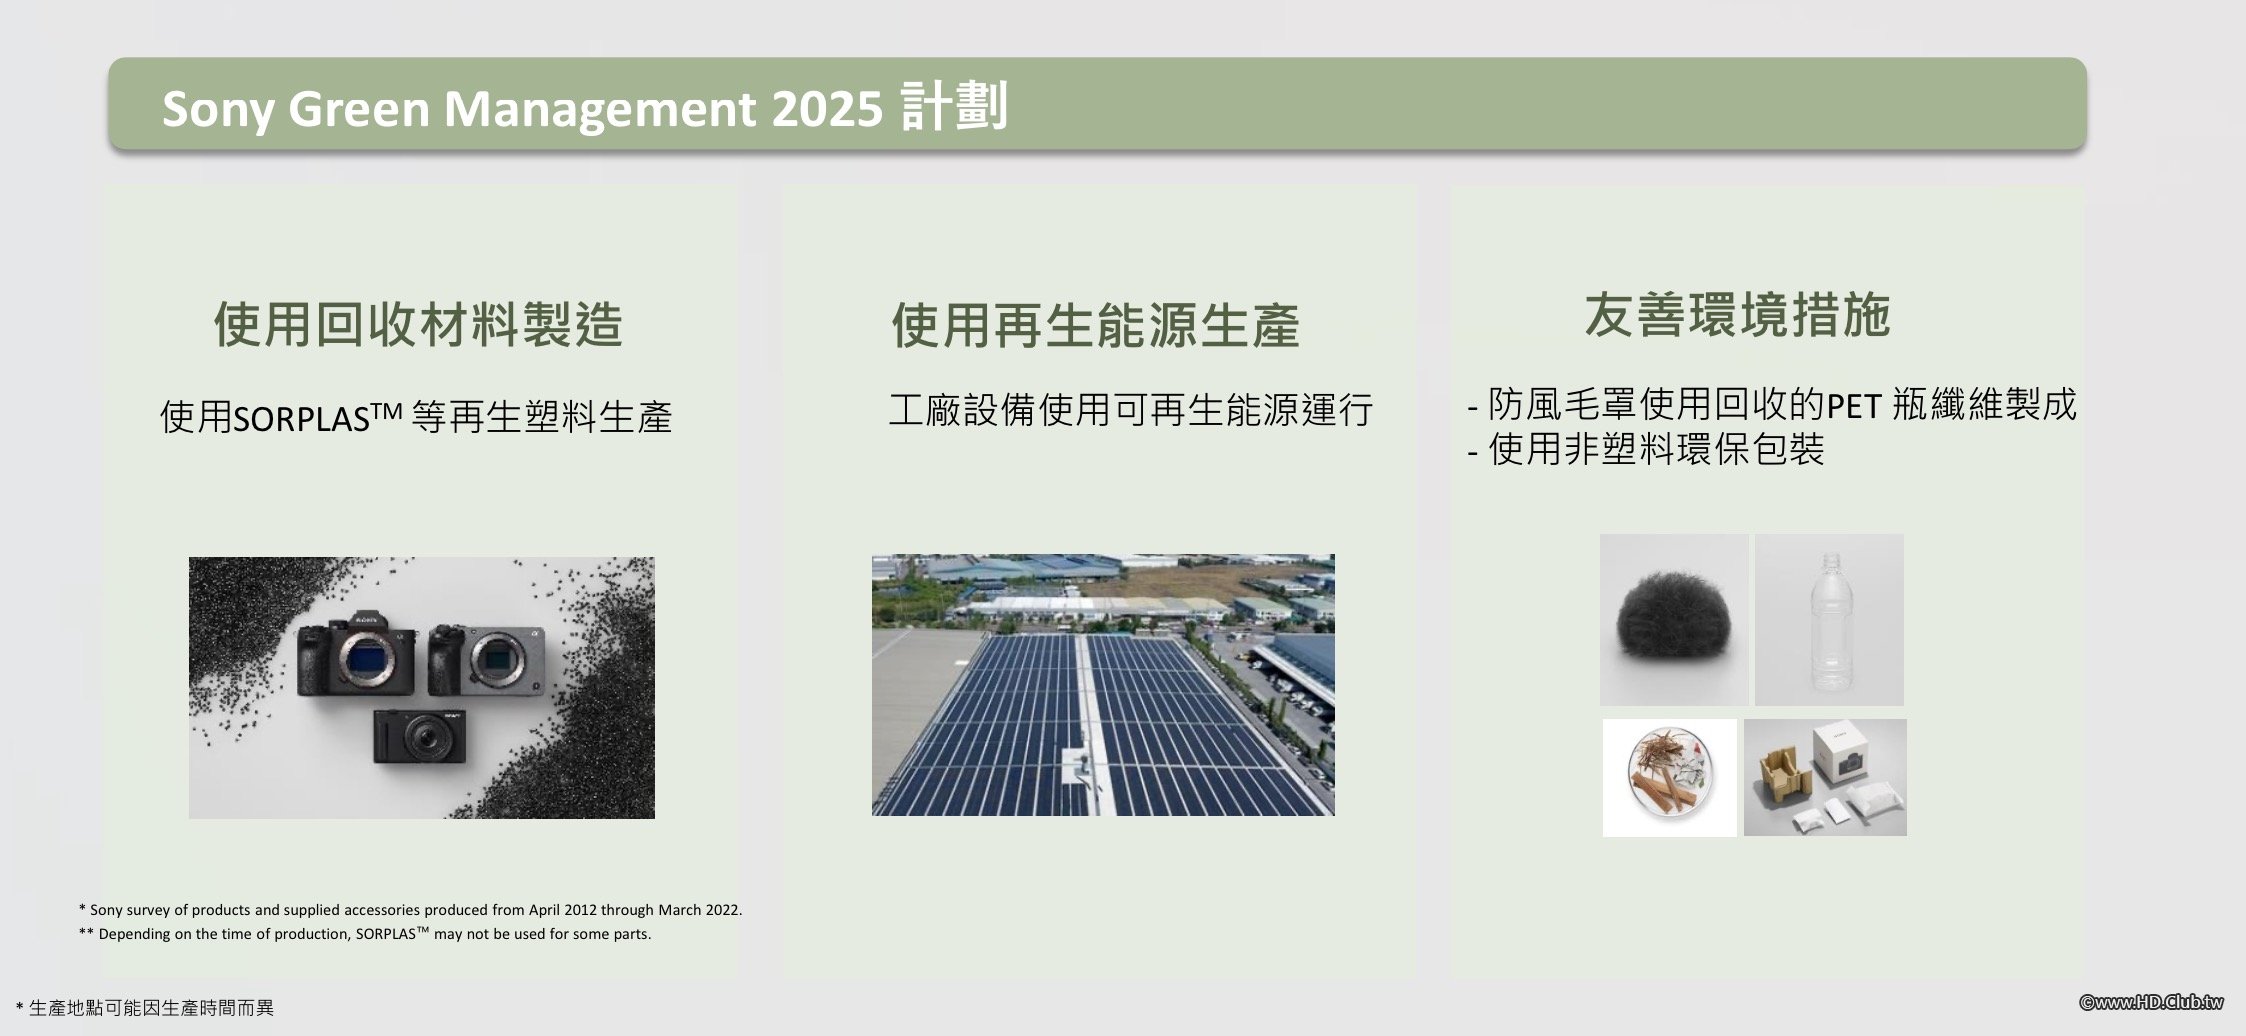 Sony Green Management 2025.jpg